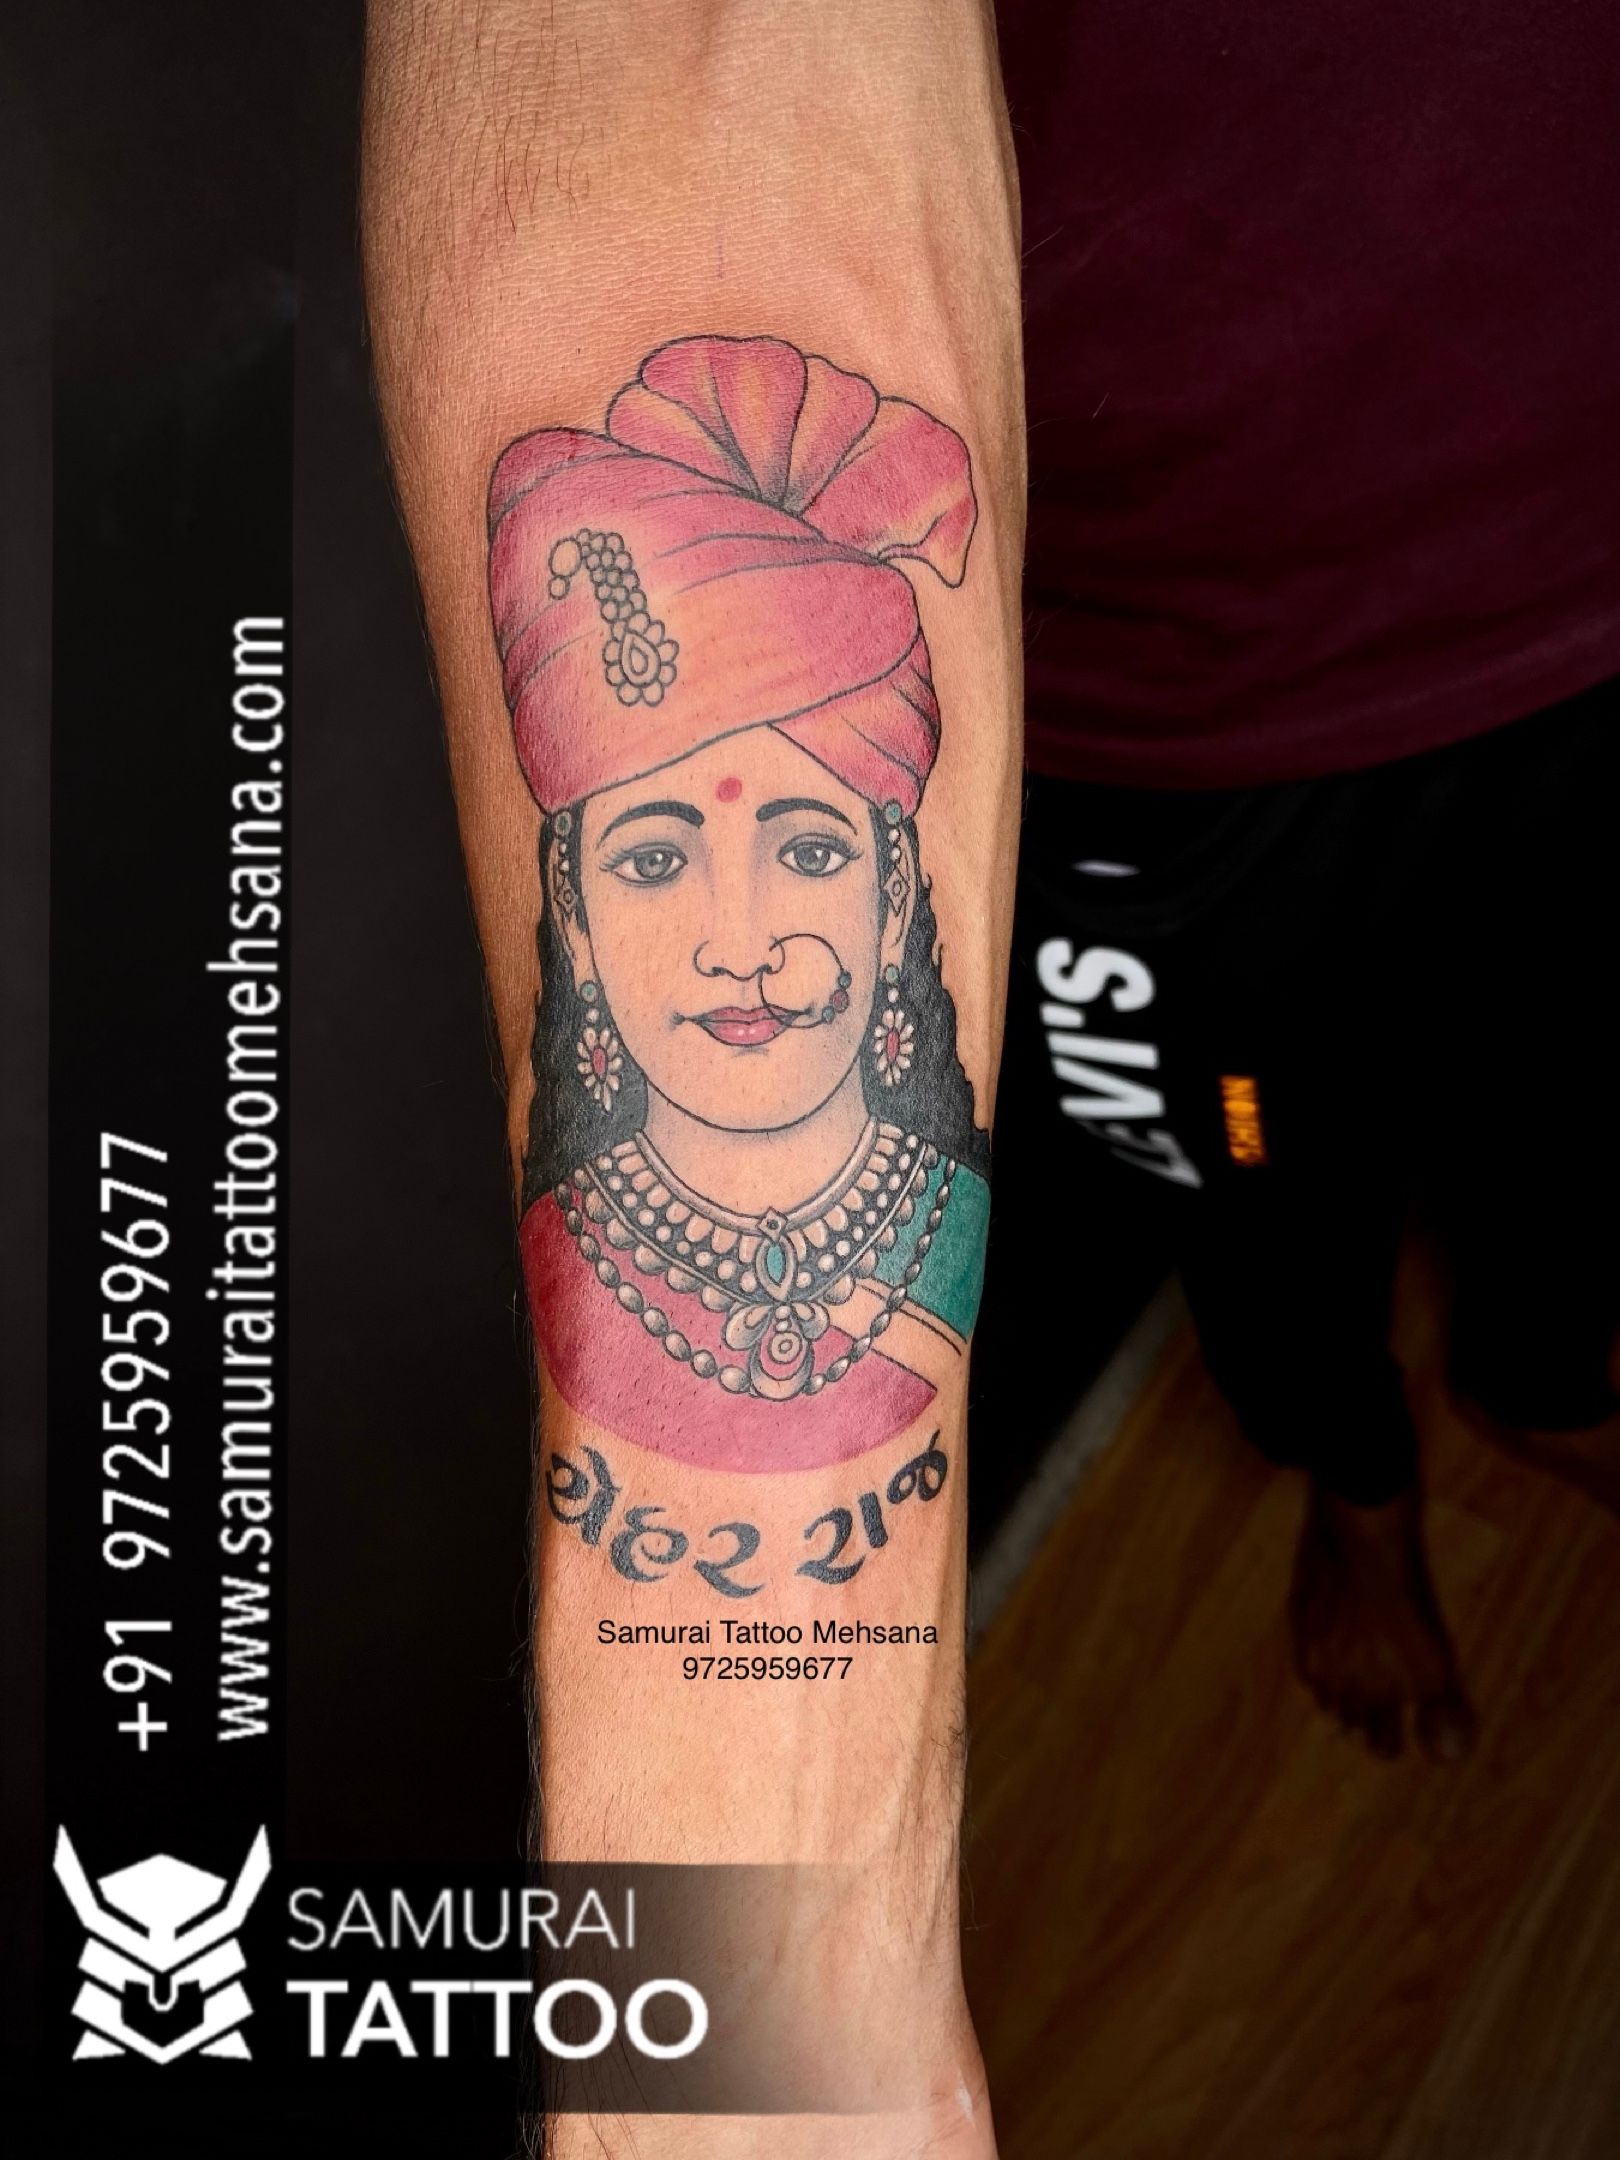 MAA chehar tattoo studio palanpur Book your appointment ✨ Call : 8849068833  Address: 29f, getaway plaza, gathaman patiyu, palanpur… | Instagram